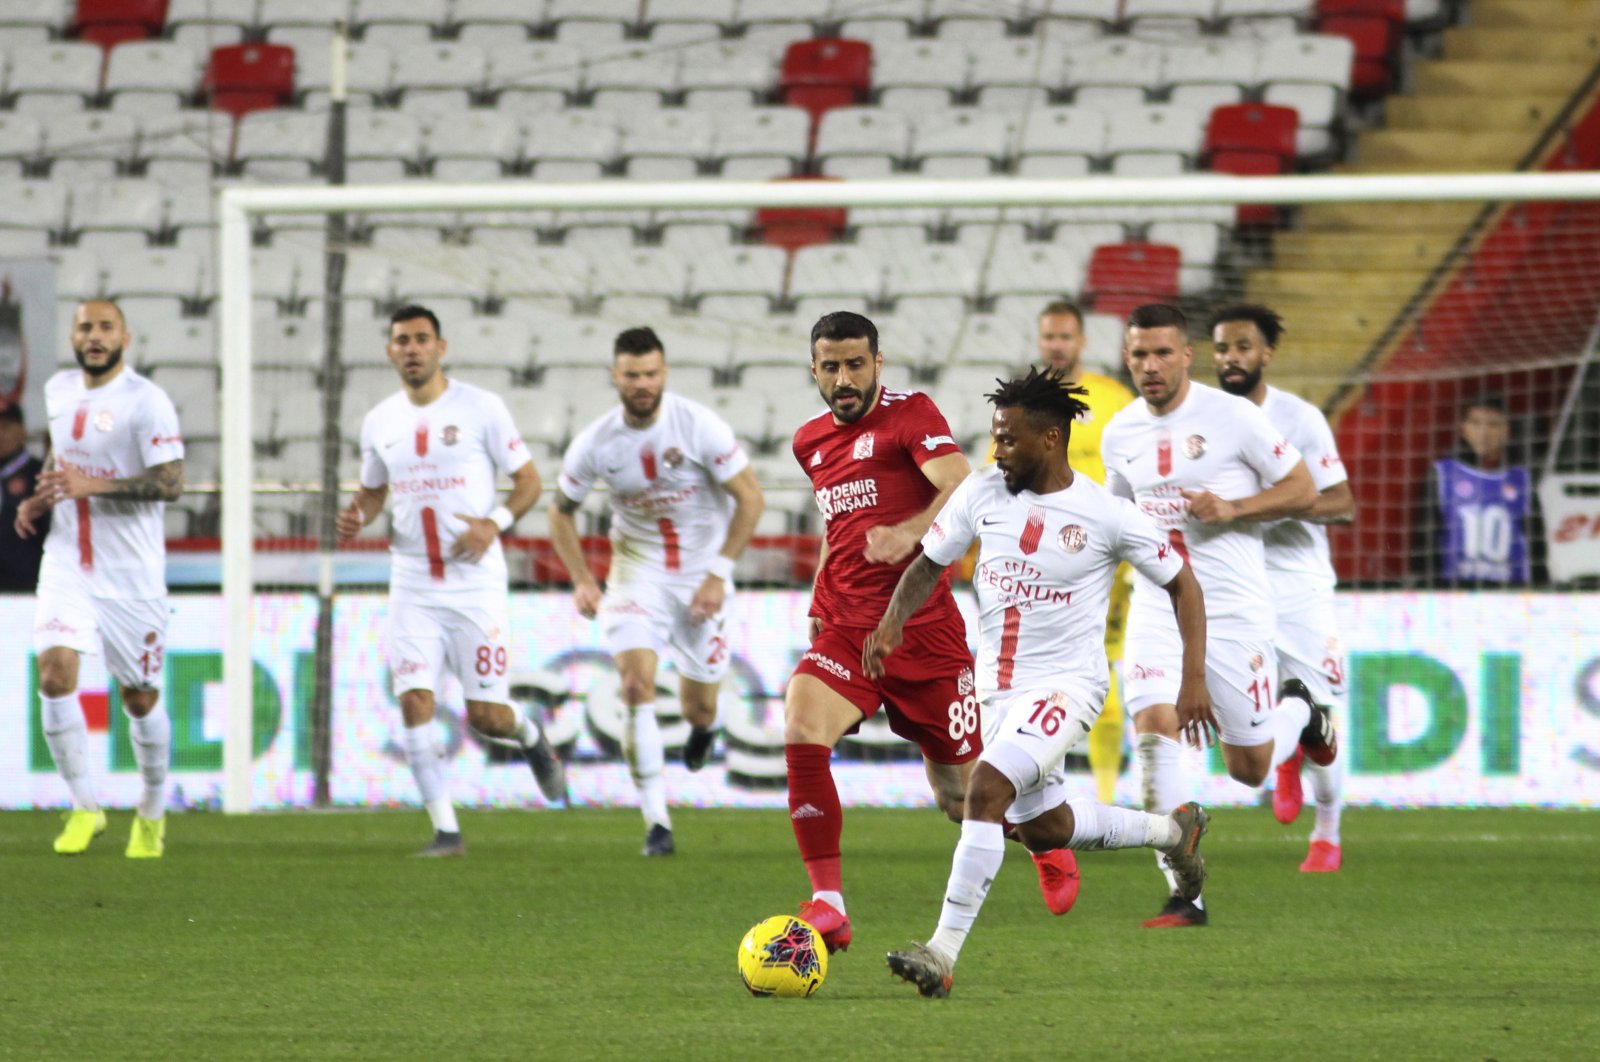 Antalyaspor's Alfredo Kulembe Ribeiro (R) controls the ball in front of Sivasspor's Caner Osmanpaşa during a Süper Lig match in Antalya, Turkey, March 16, 2020. (AP Photo)